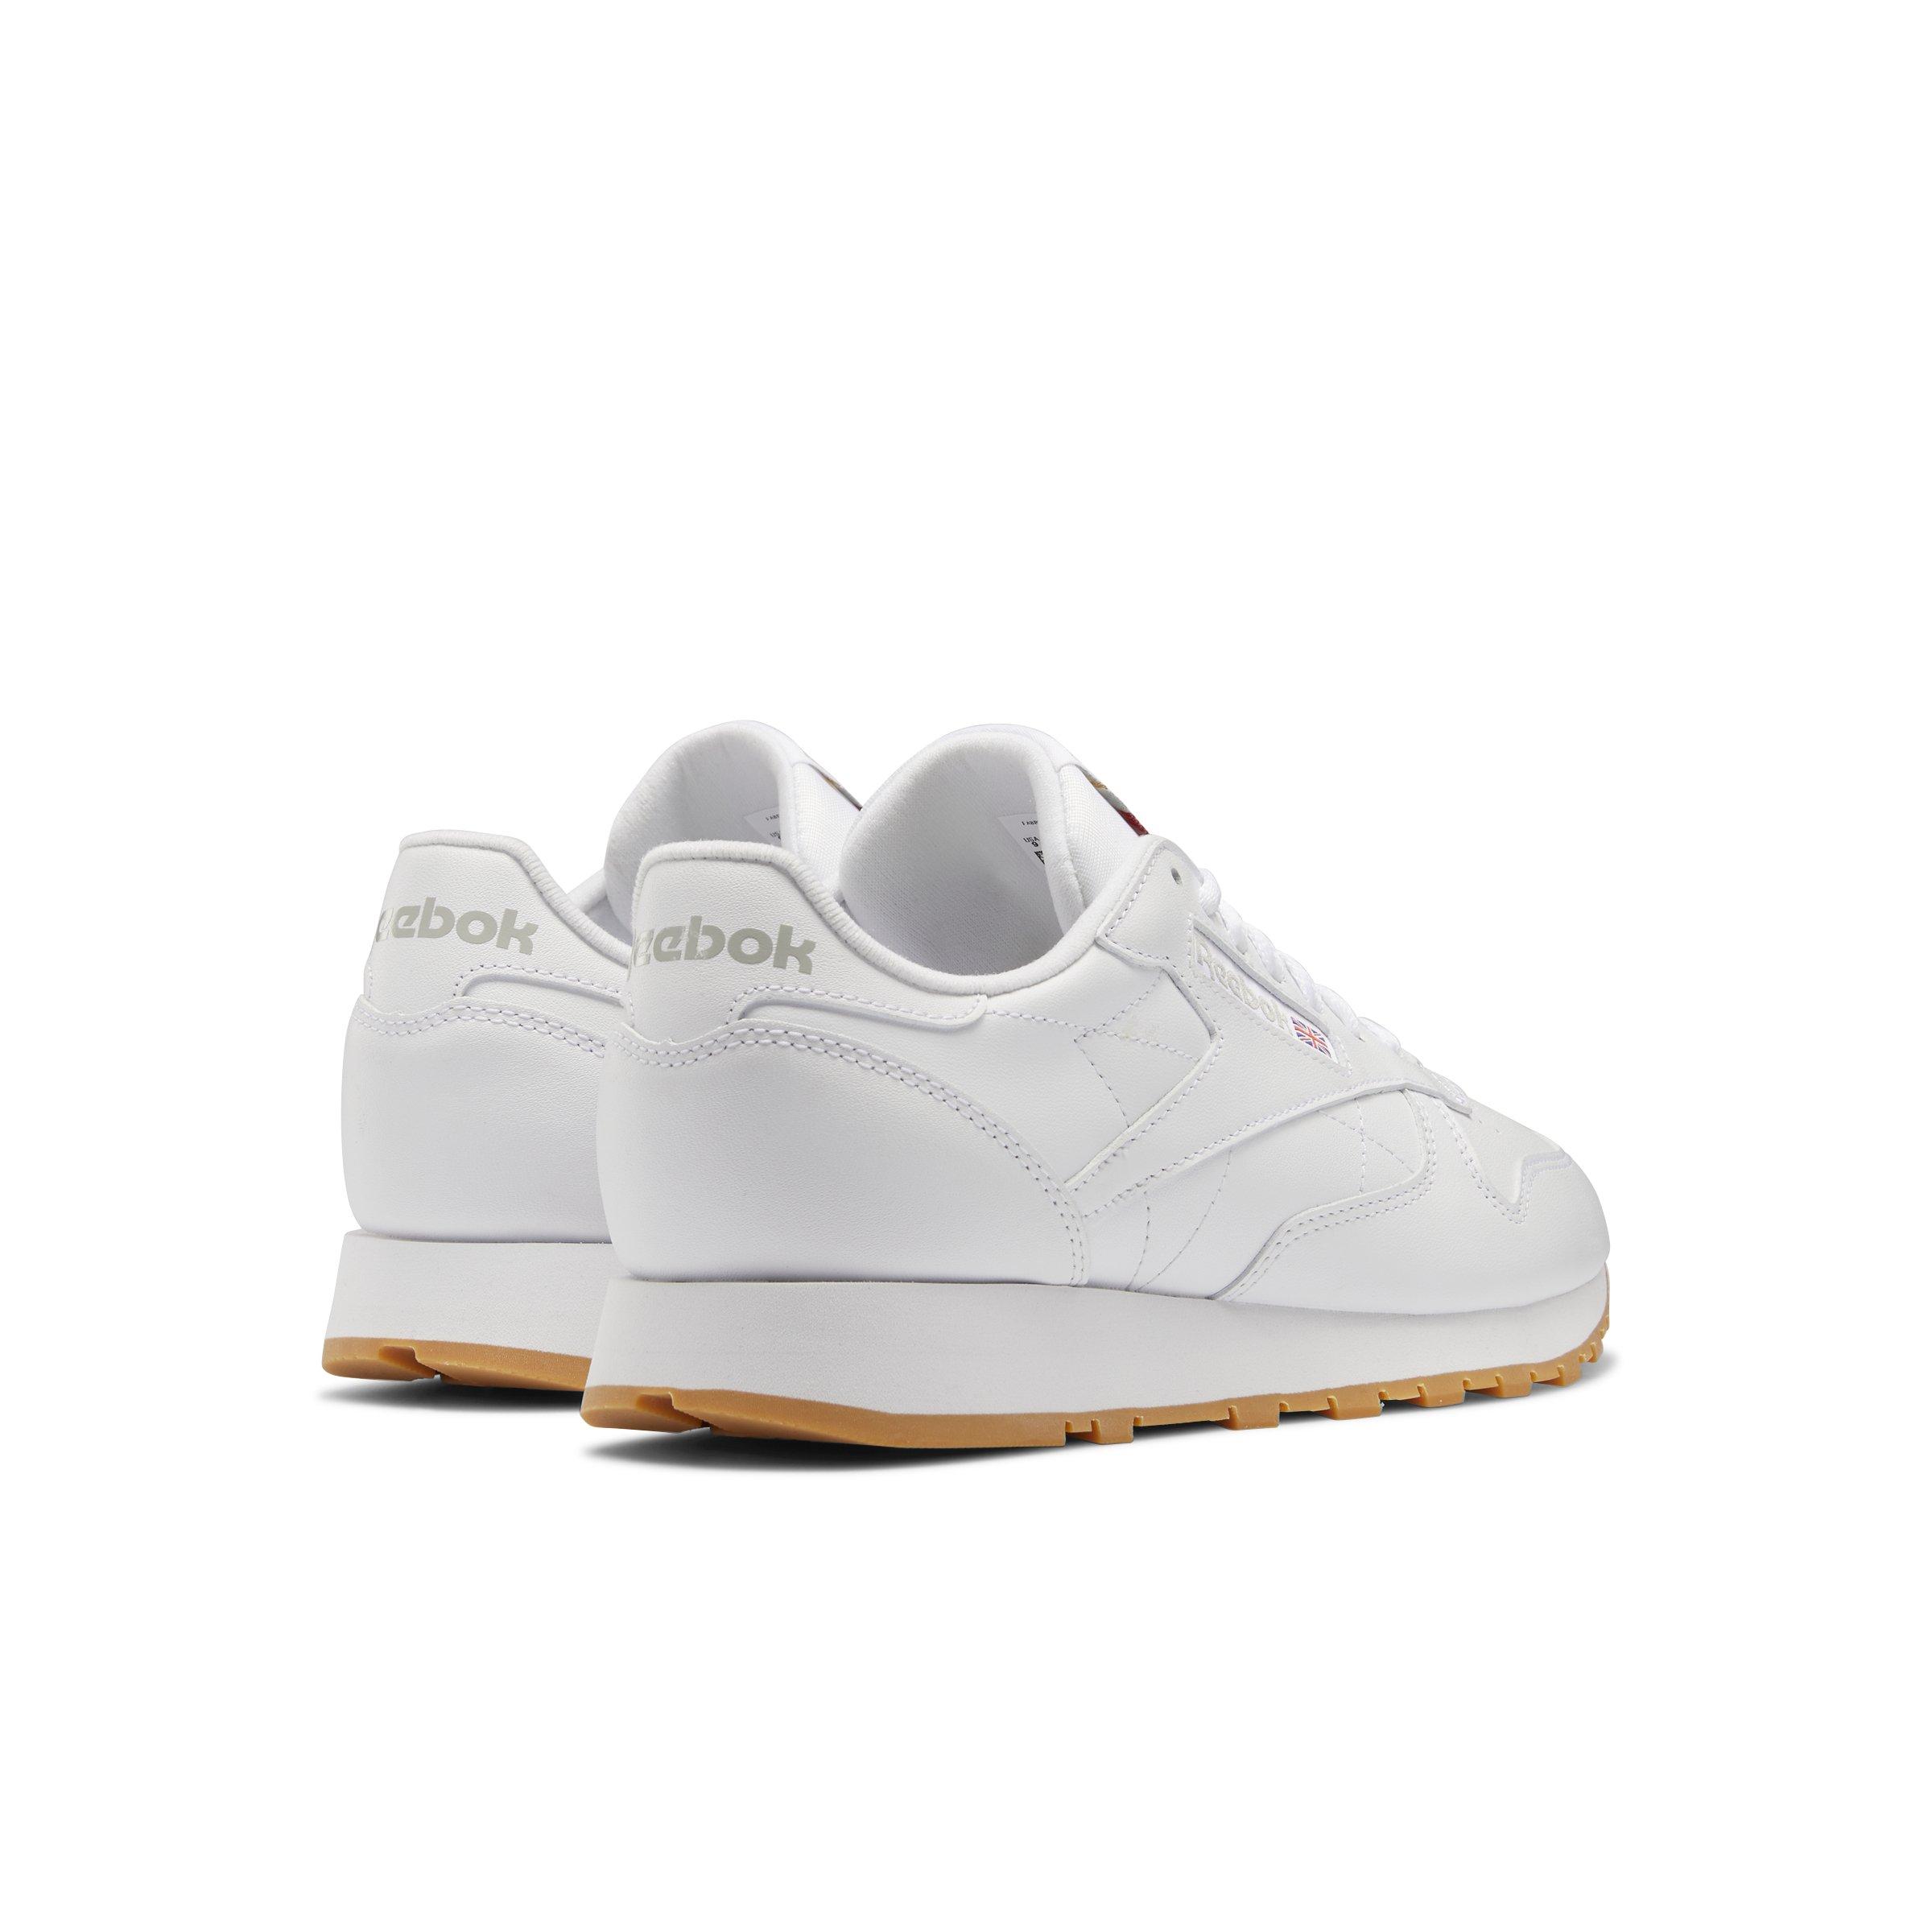 Reebok Classic "White/Grey/Gum" Men's Shoe